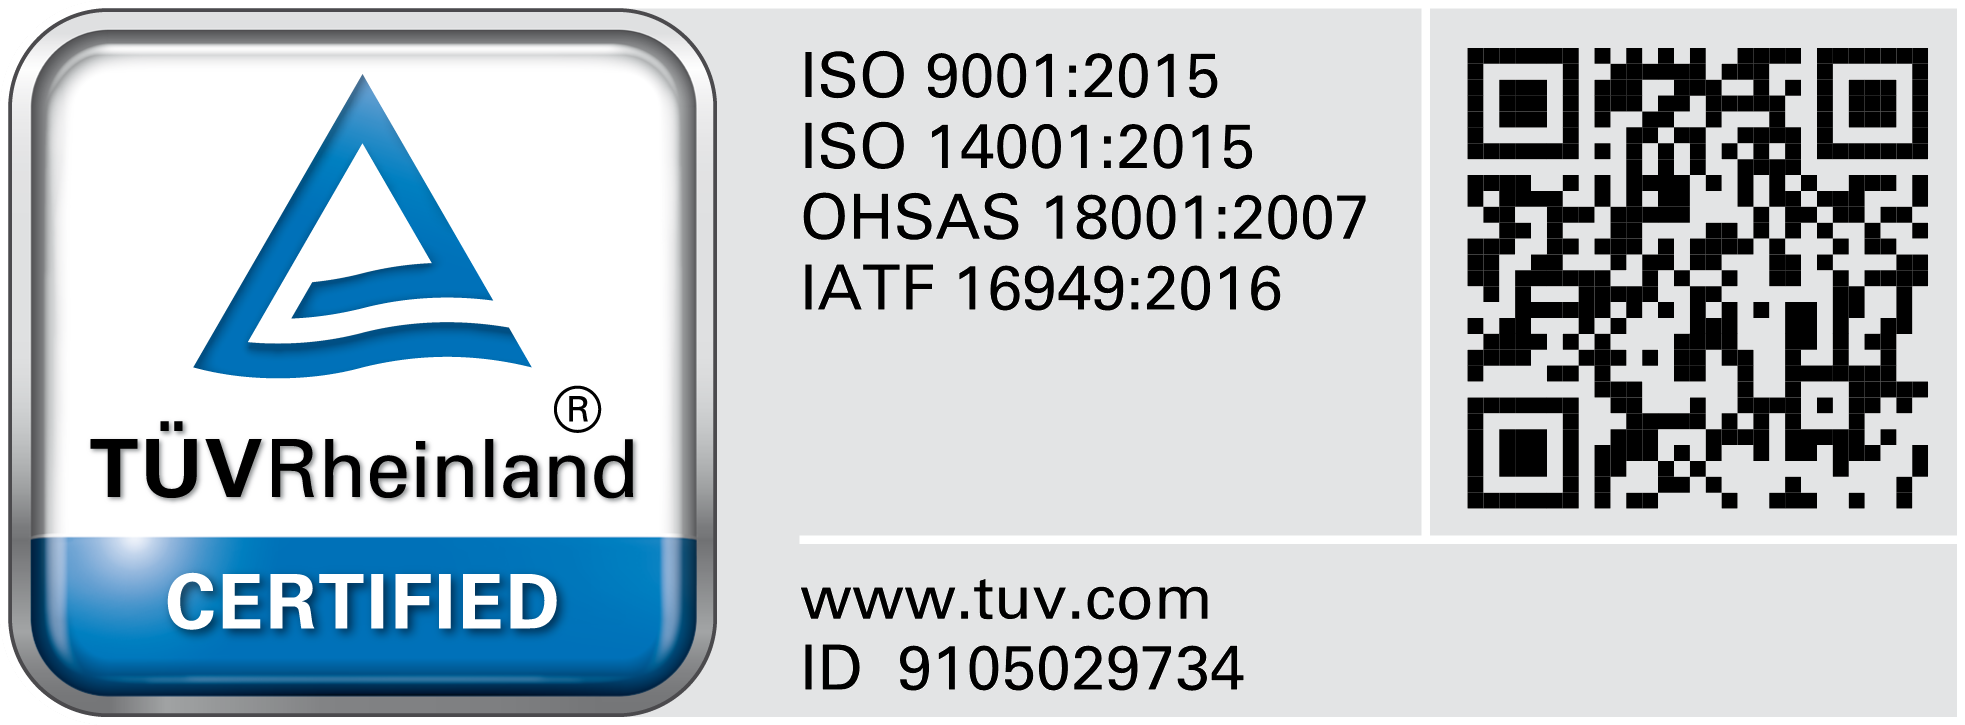 OHSAS 18001:1999 - Certificate Registration No : 01 113 05 3505